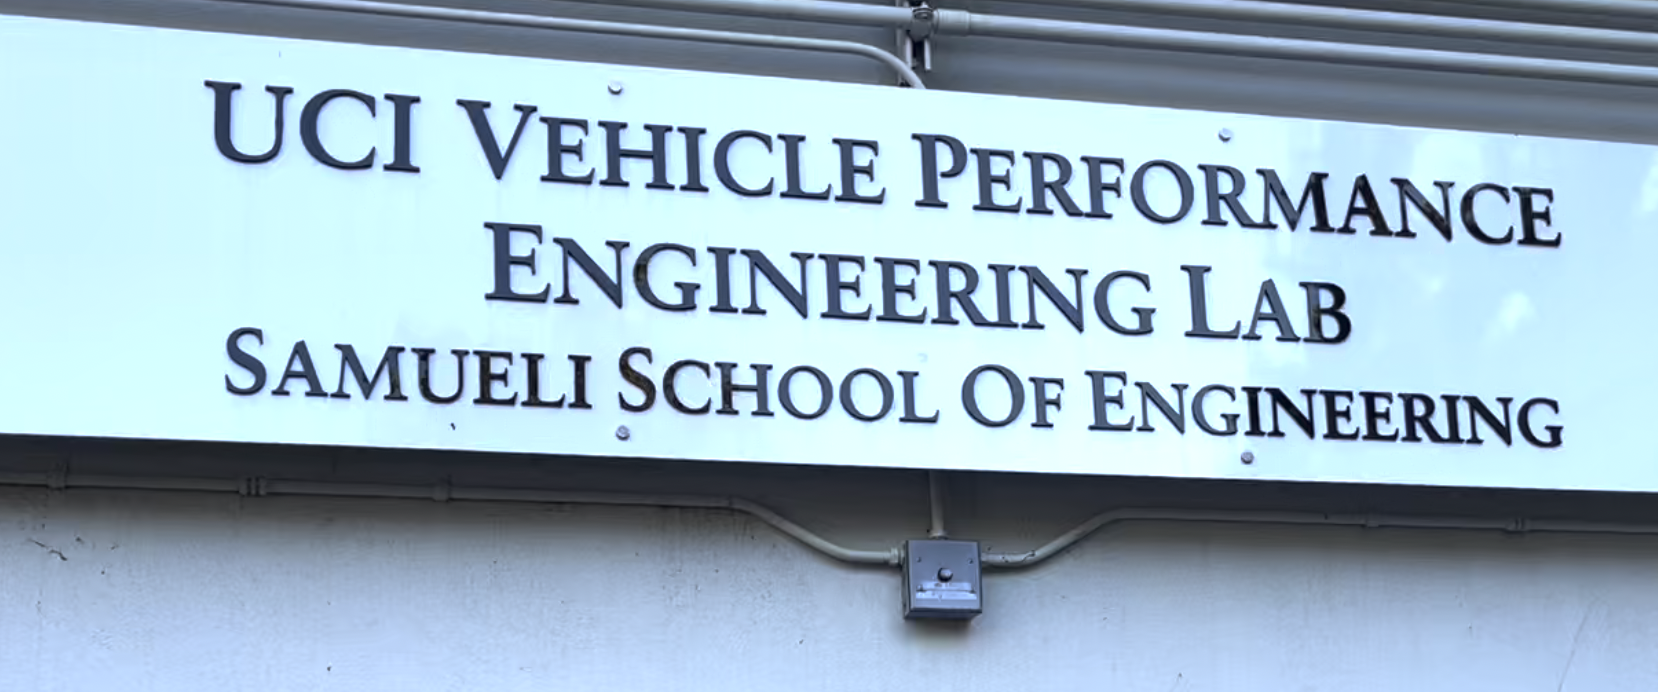 UCI Vehicle Performance Engineering Lab